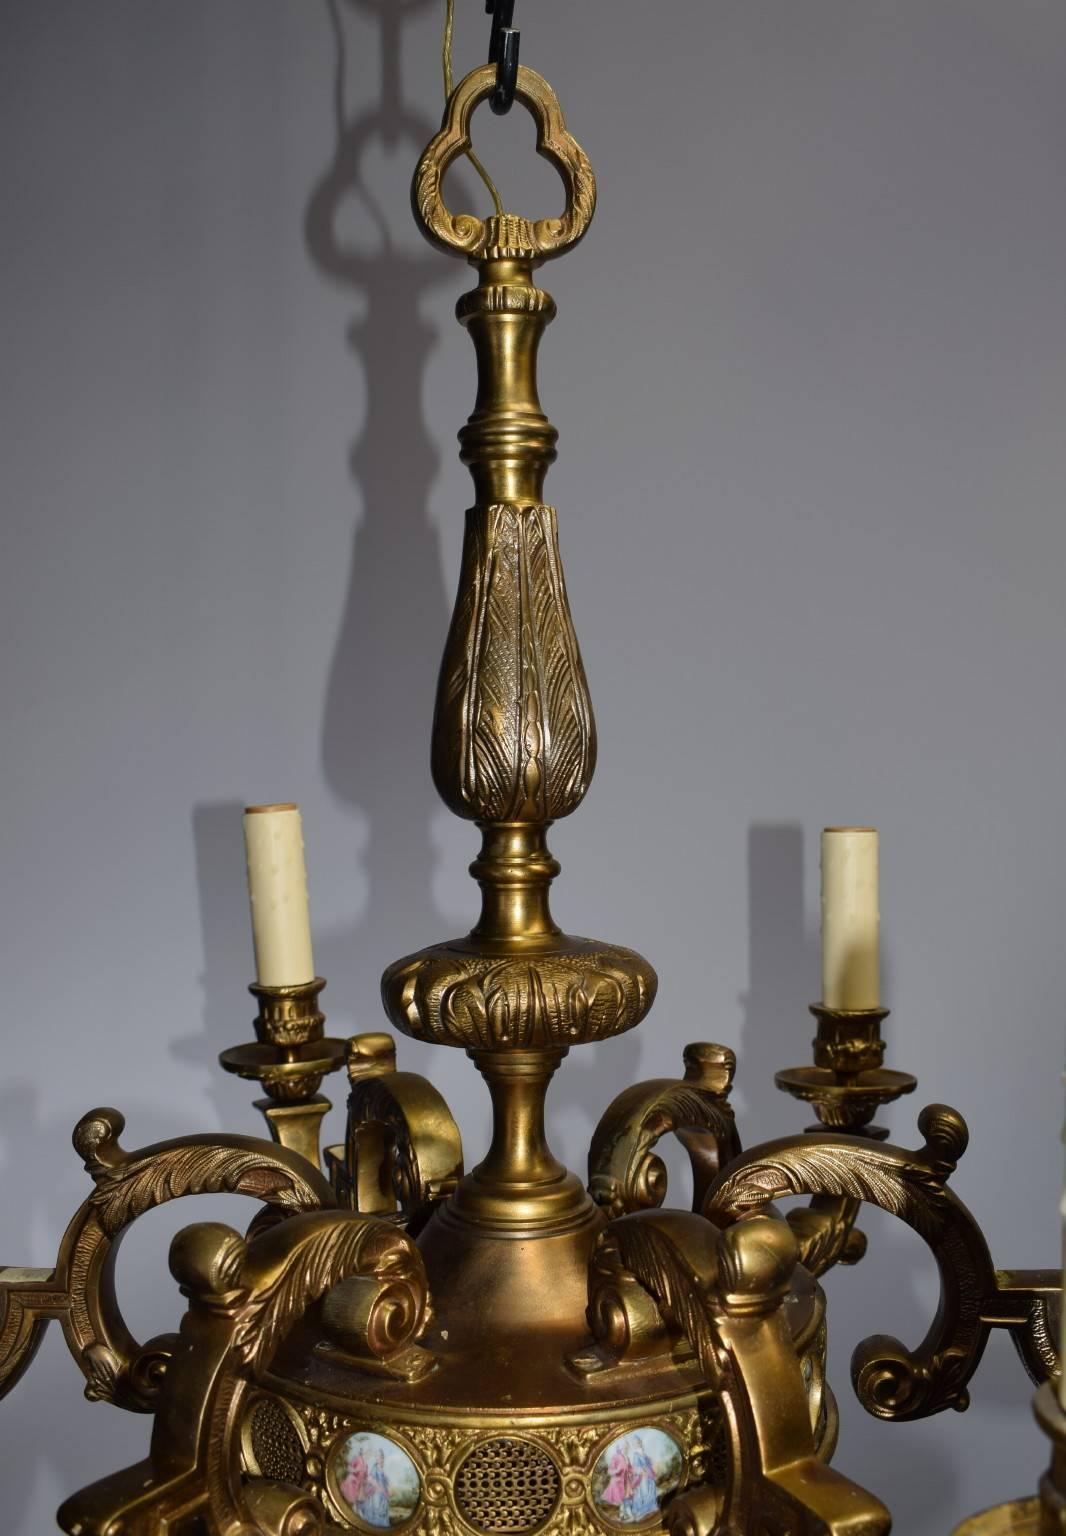 antique chandeliers